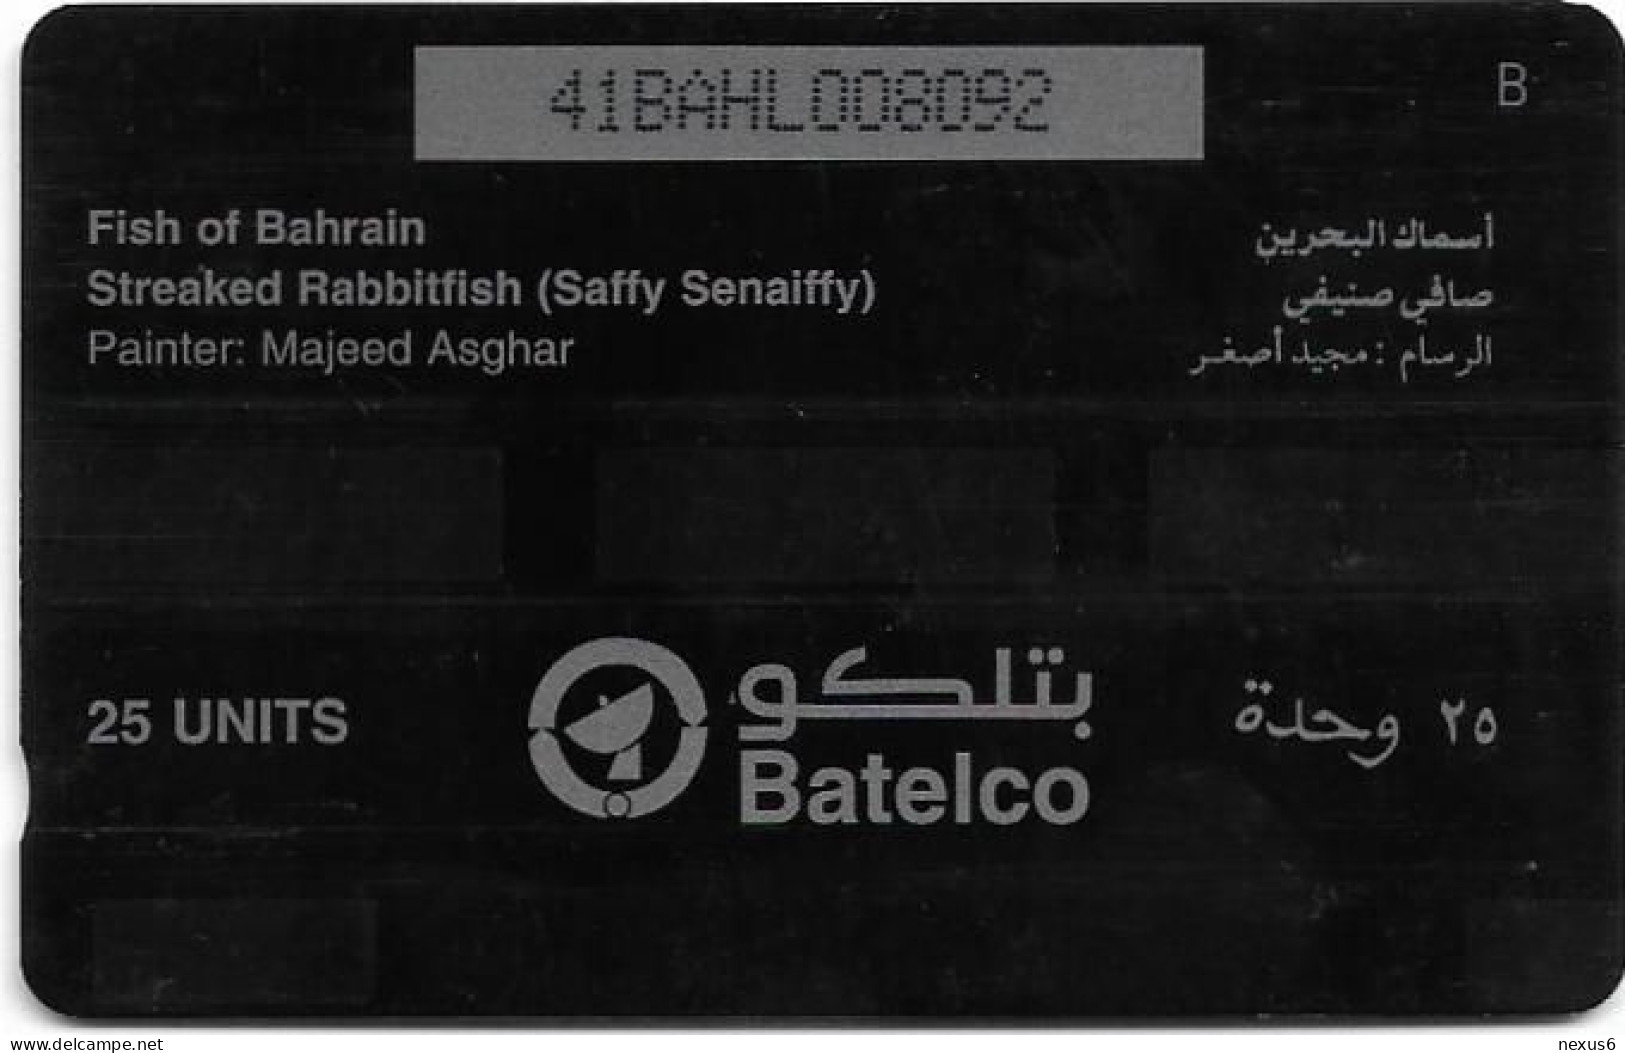 Bahrain - Batelco (GPT) - Fish Of Bahrain - Streaked Rabbitfish - 41BAHL (Normal 0), 1996, 25Units, Used - Bahrain